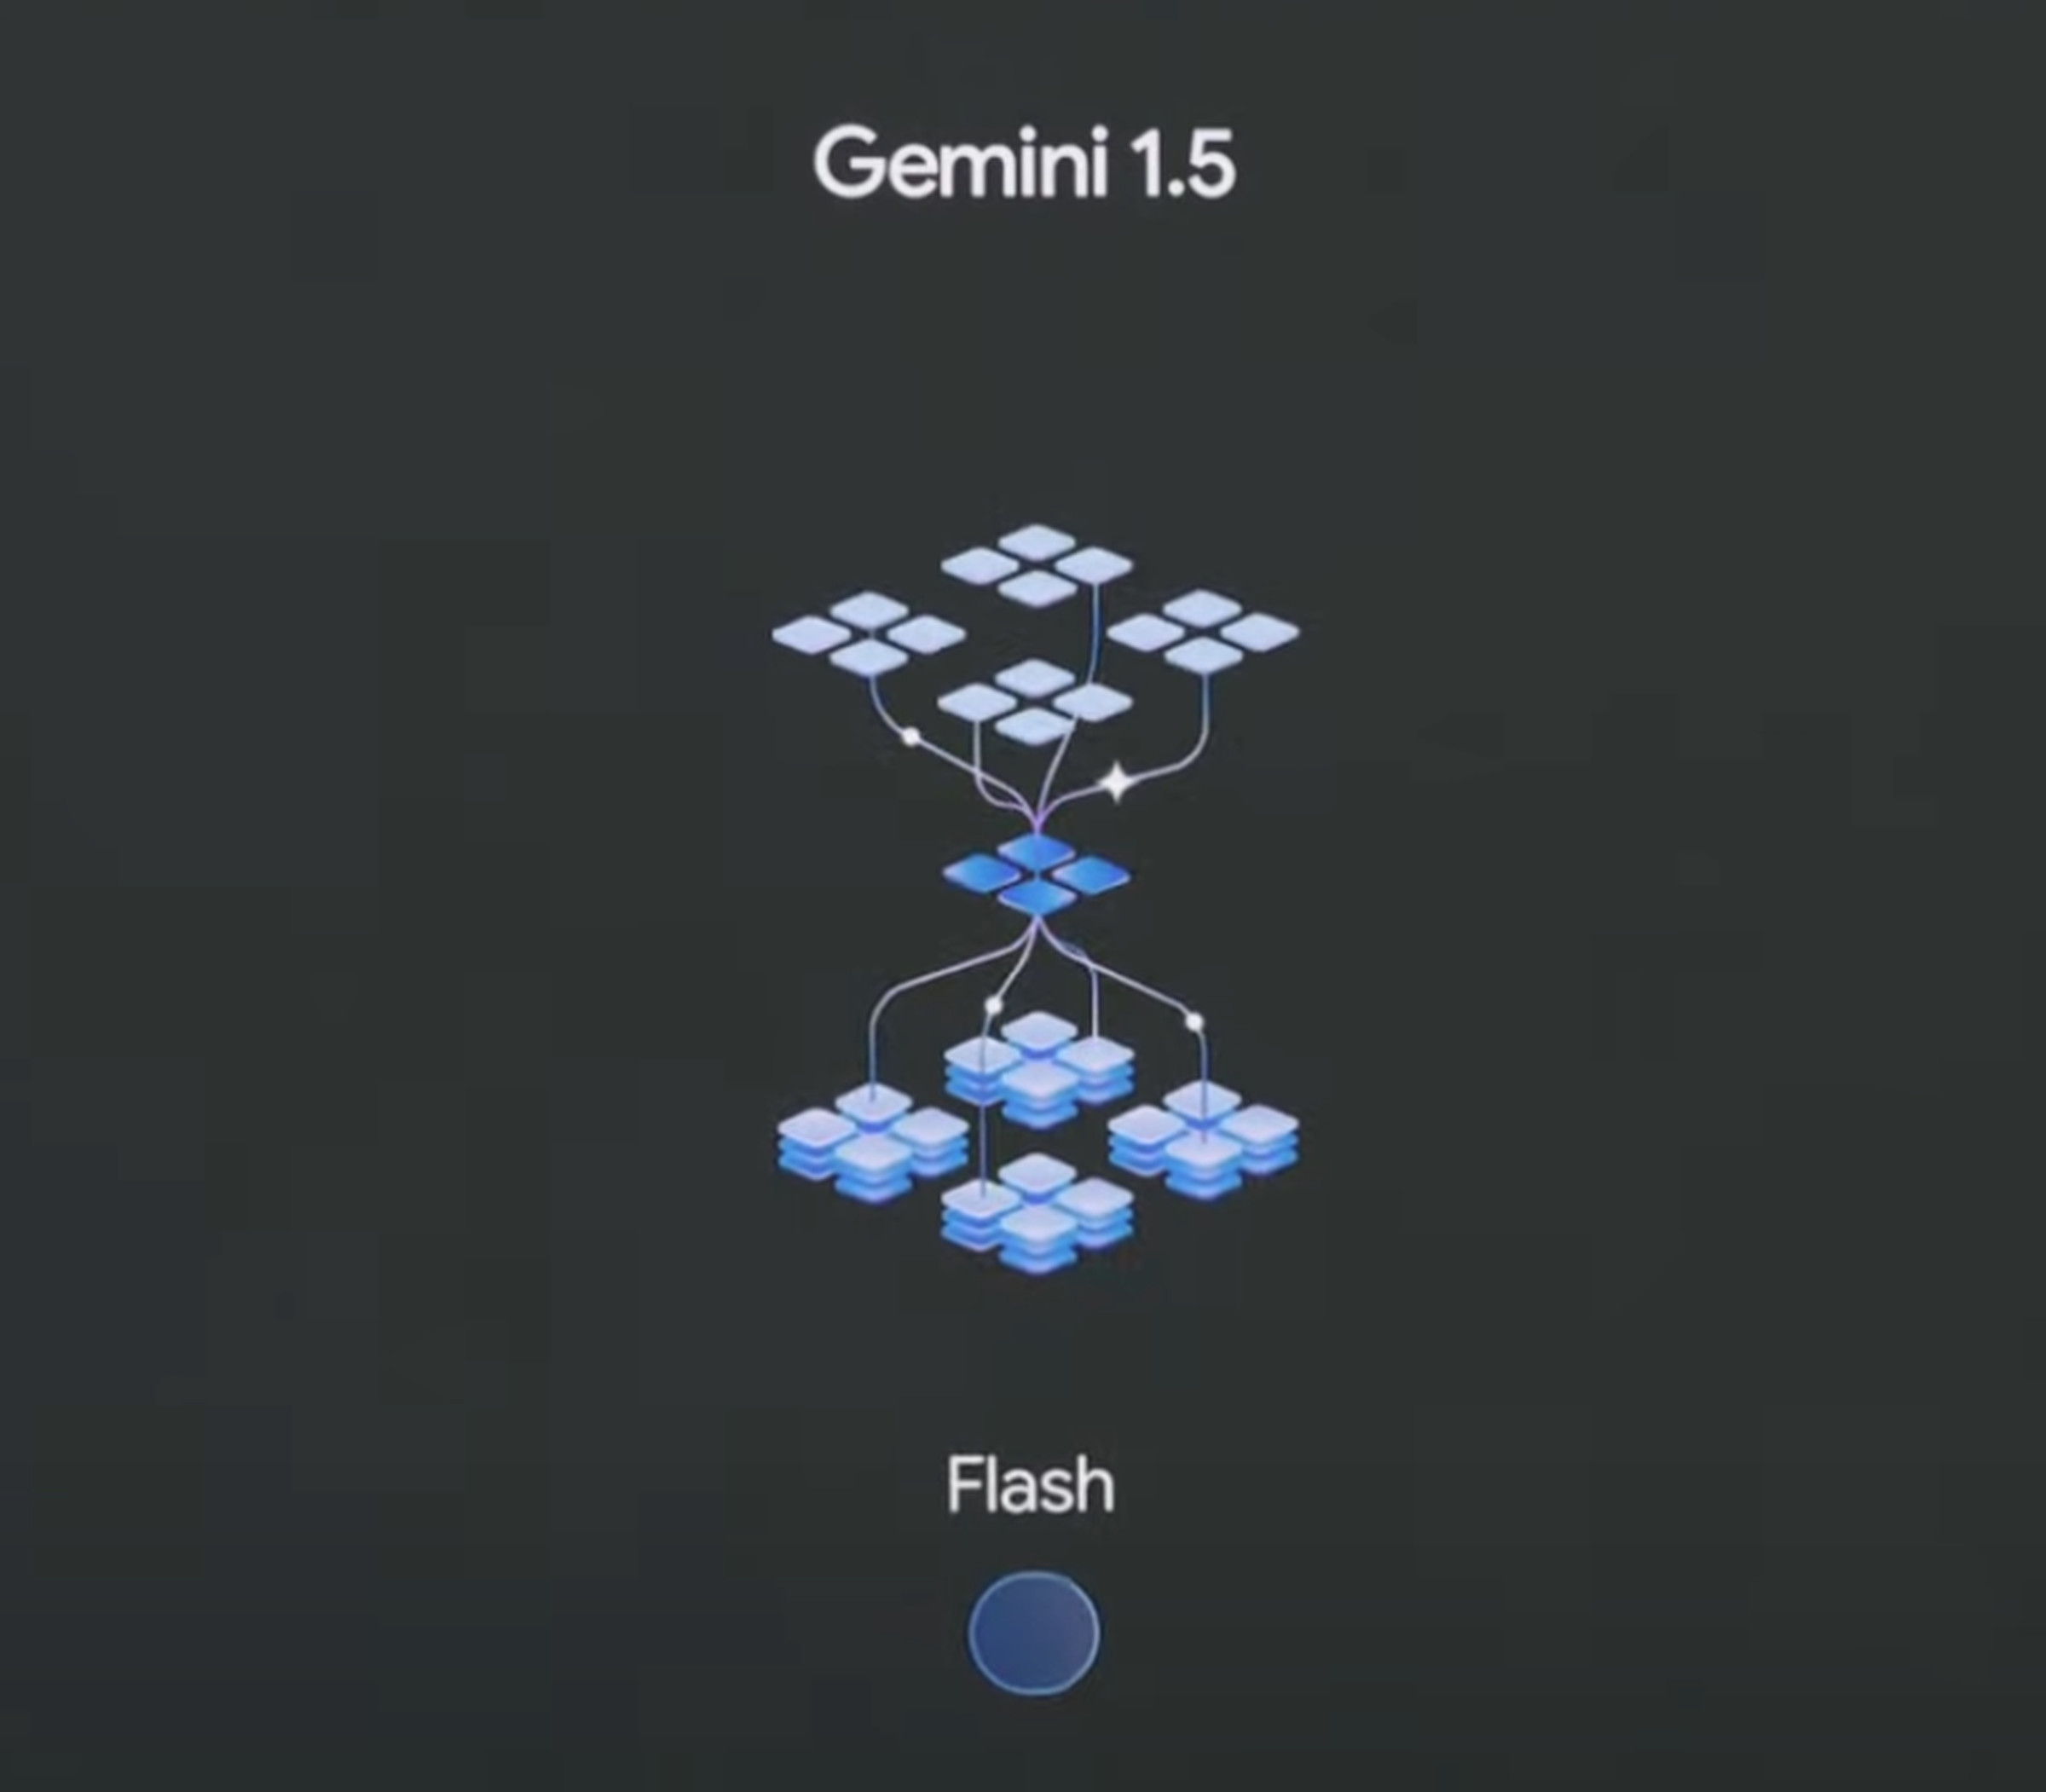 Screenshot of Gemini 1.5 Flash graphic.